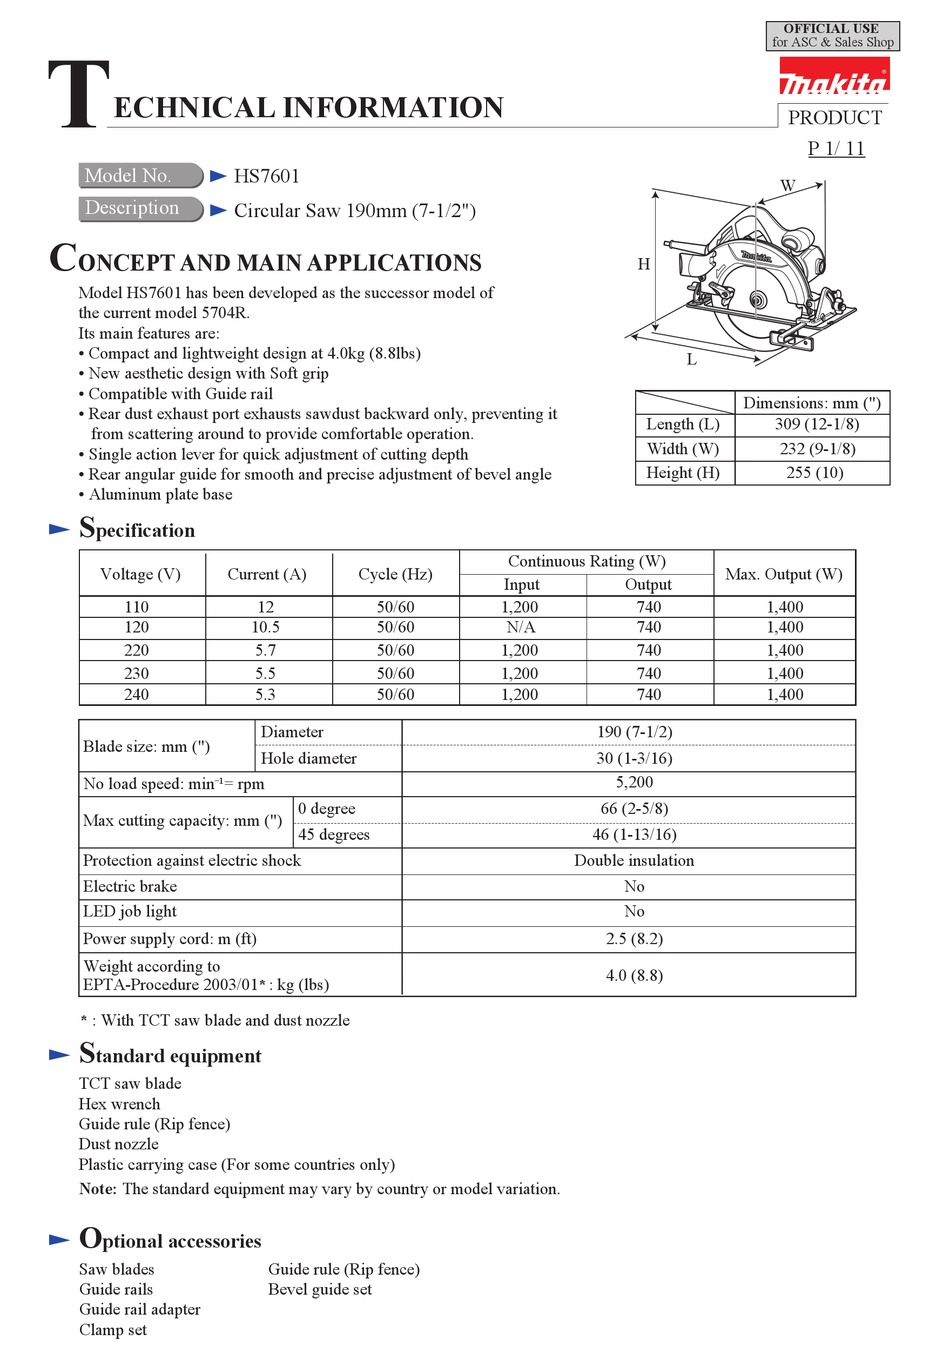 MAKITA HS7601 TECHNICAL INFORMATION Pdf Download | ManualsLib